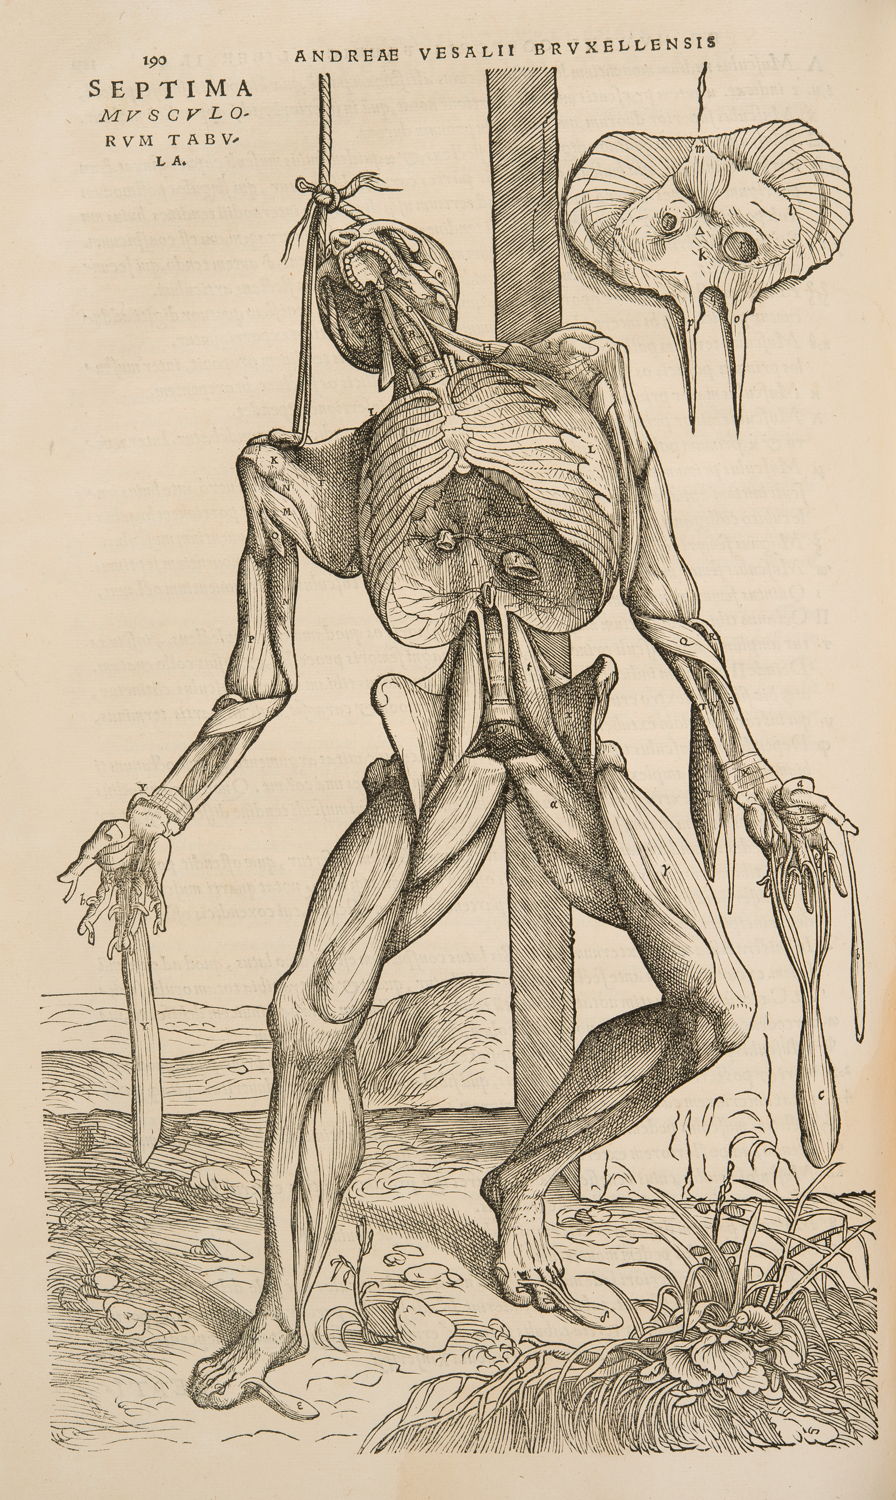 André Vésale, De Humani Corporis Fabrica Libri Septem, Bâle, 1543 © KU Leuven, Bibliothèque universitaire, inv. CaaC17 – Bruno Vandermeulen.